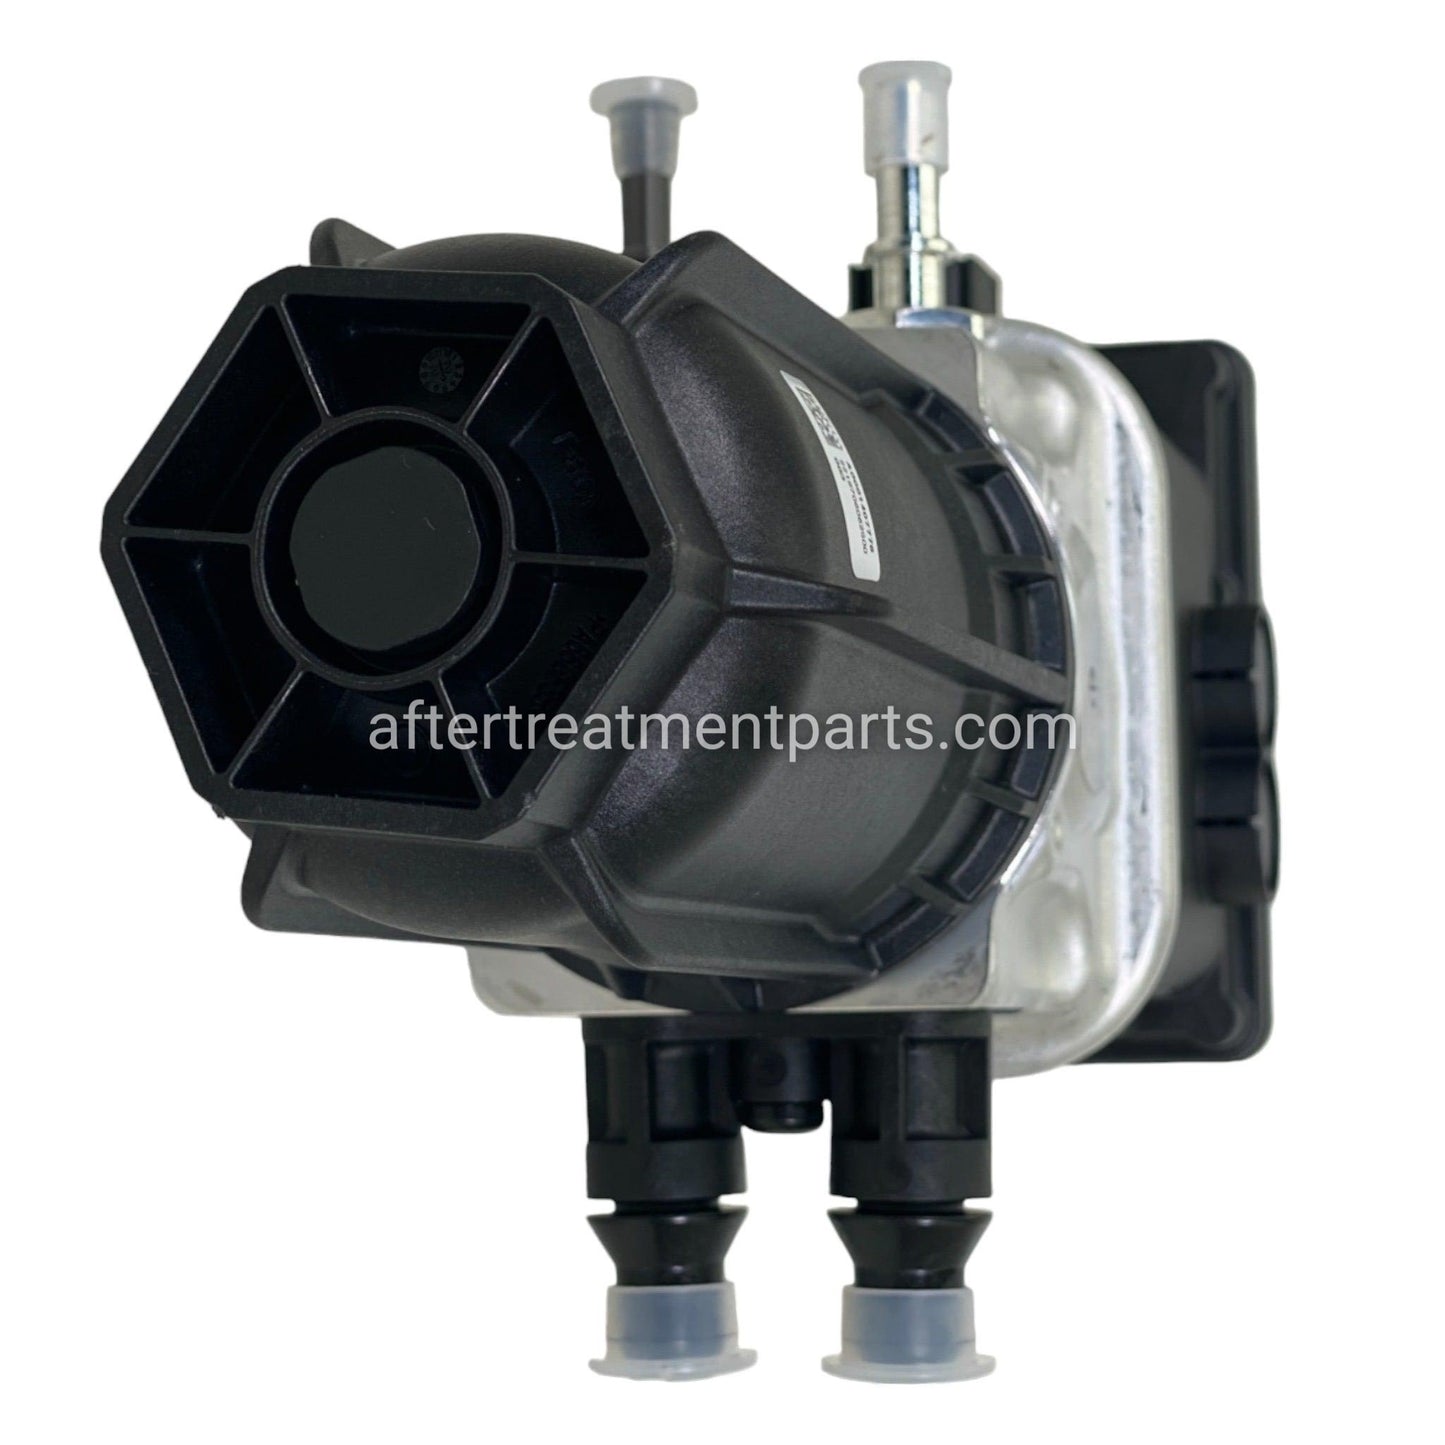 A0001407778 | DEF Pump | For Detroit Diesel® Engines